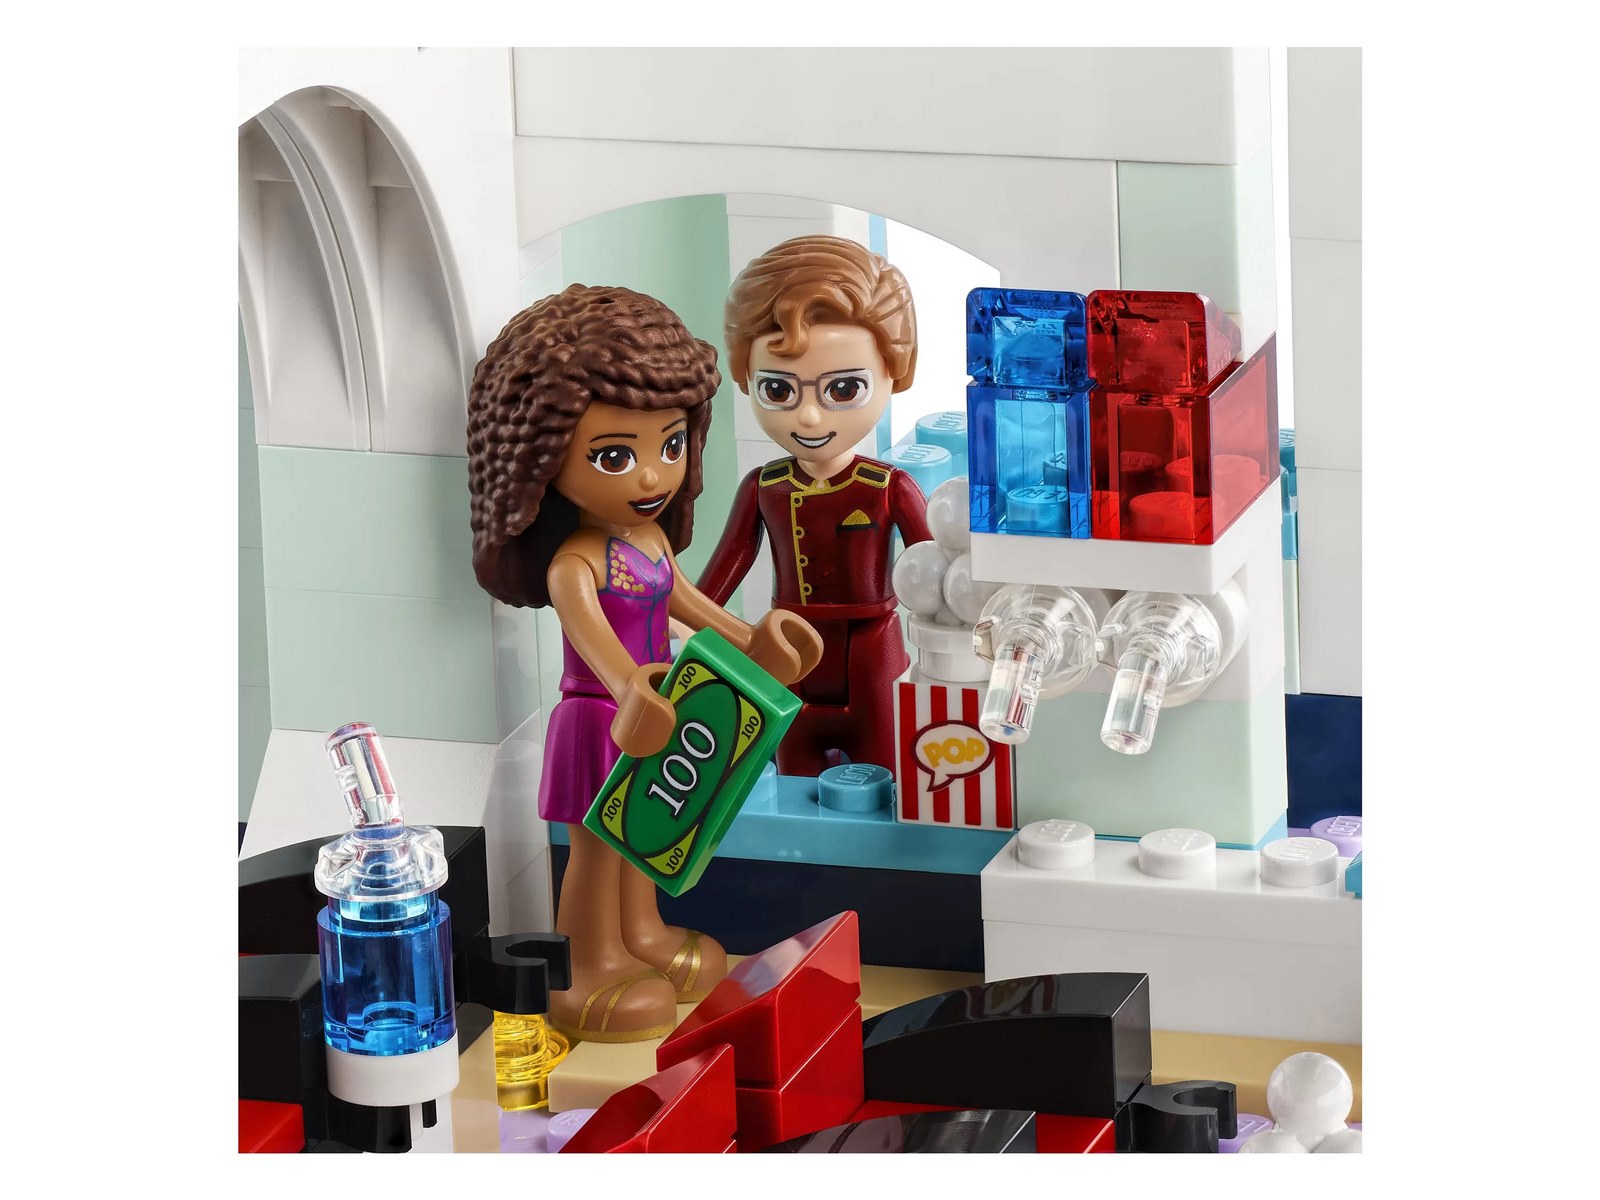 Конструктор LEGO Friends  «Кинотеатр Хартлейк-Сити» 41448 / 451 деталь